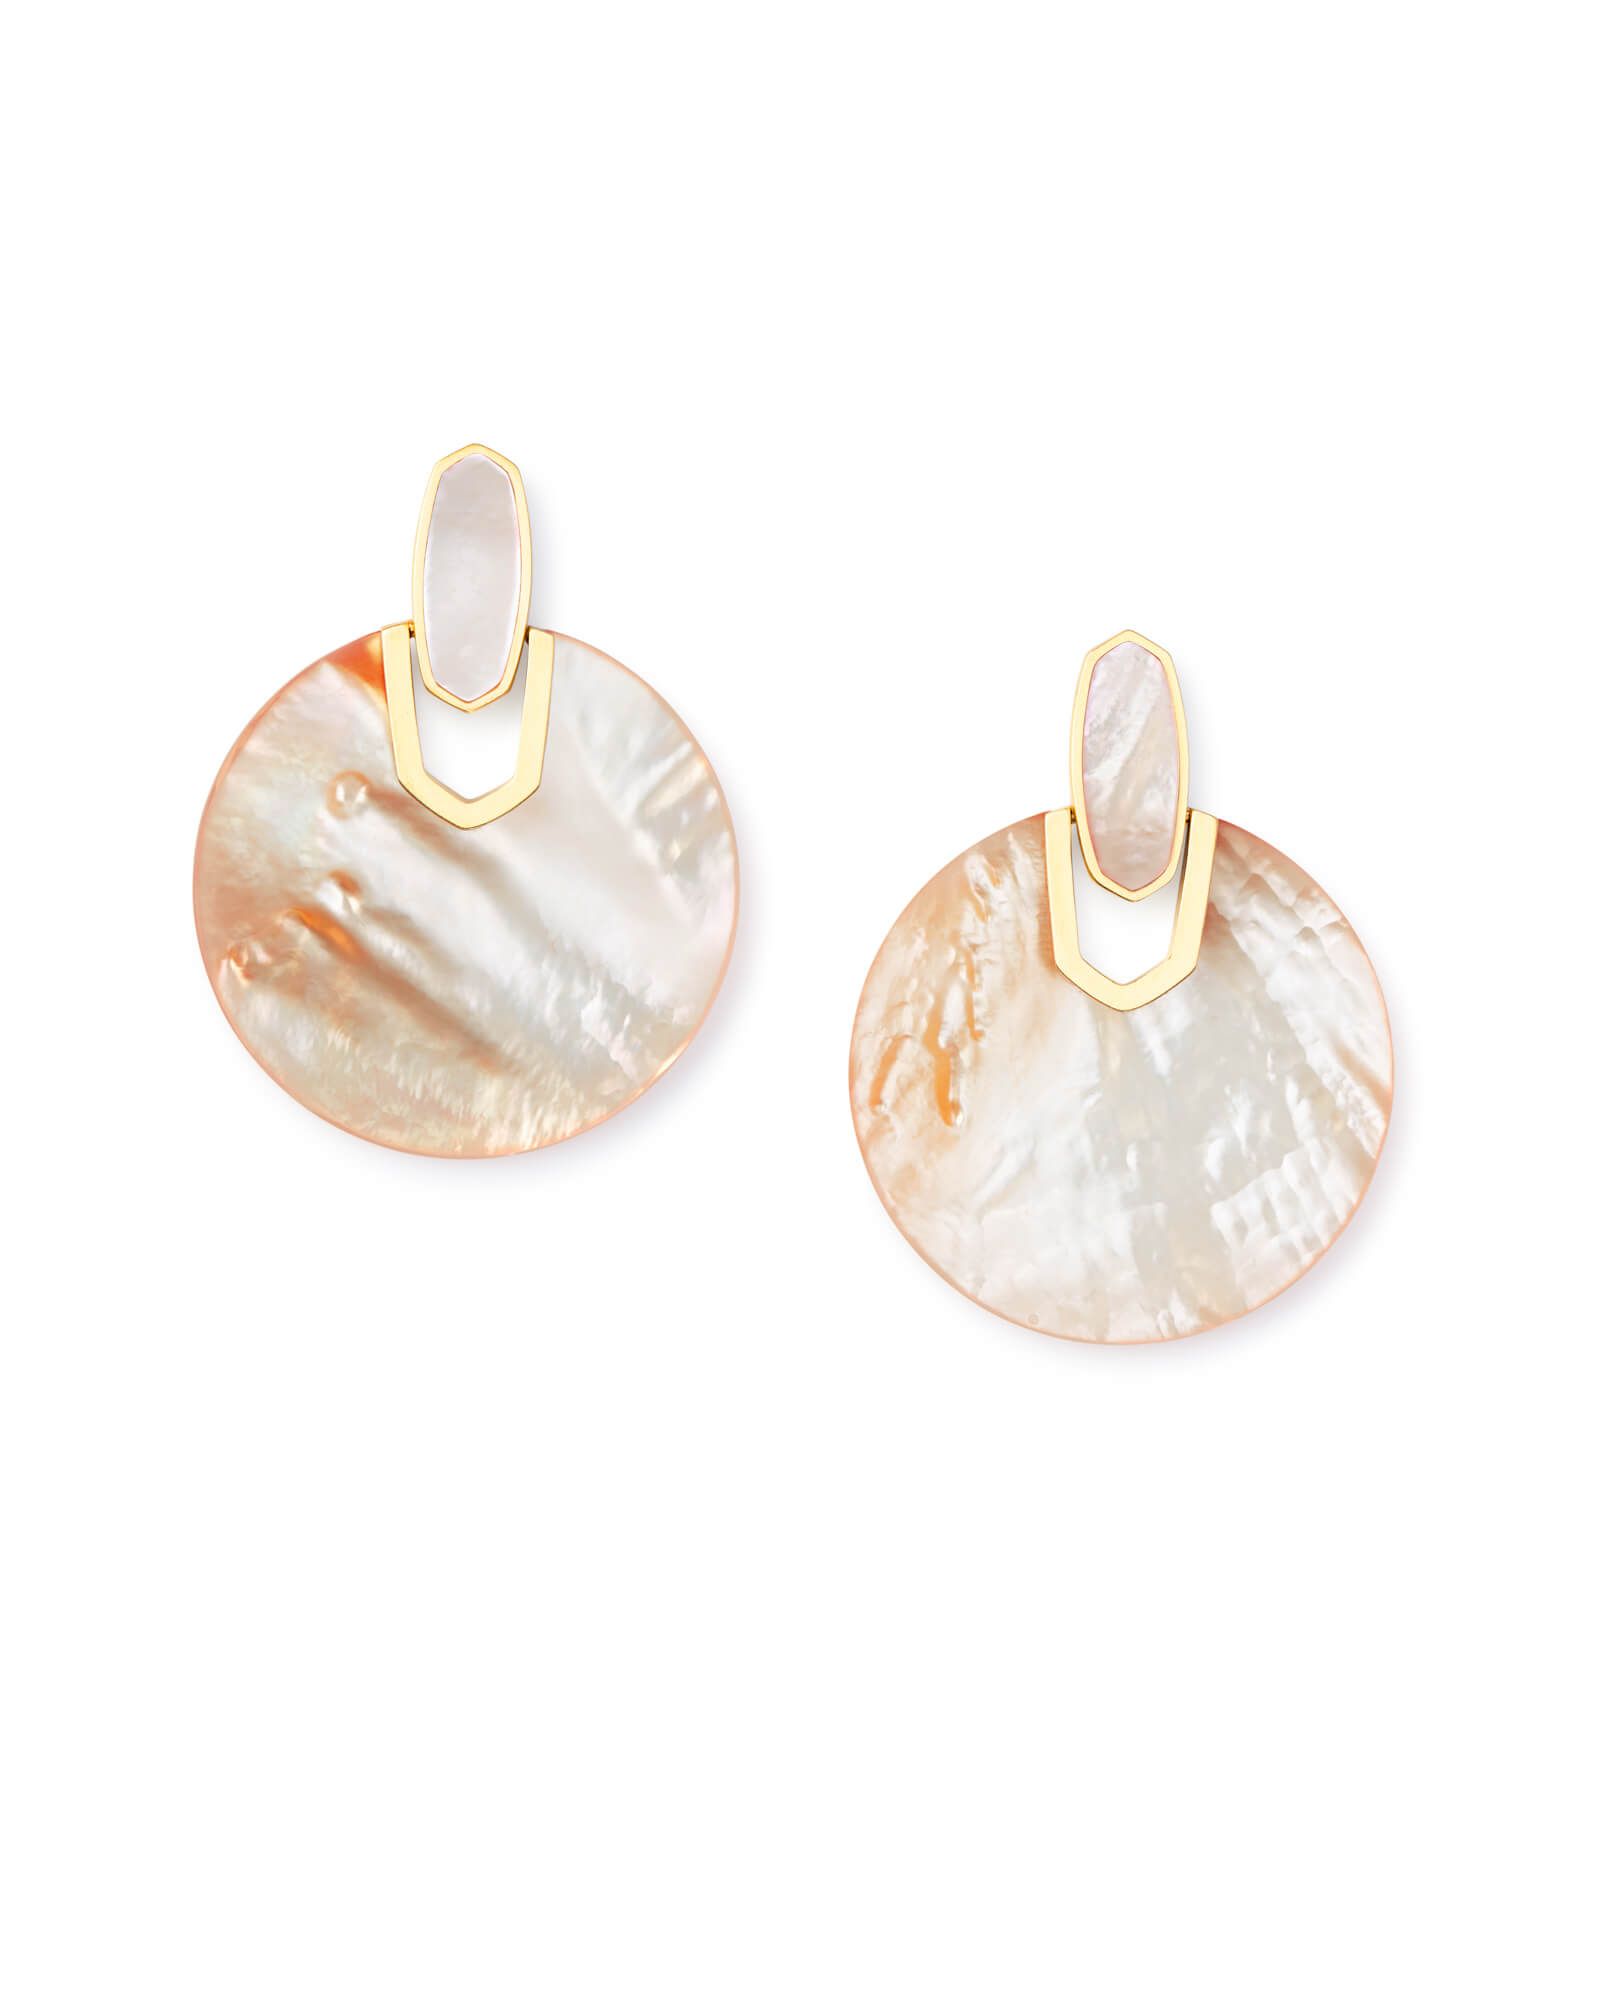 Didi Gold Statement Earrings in Peach Pearl | Kendra Scott